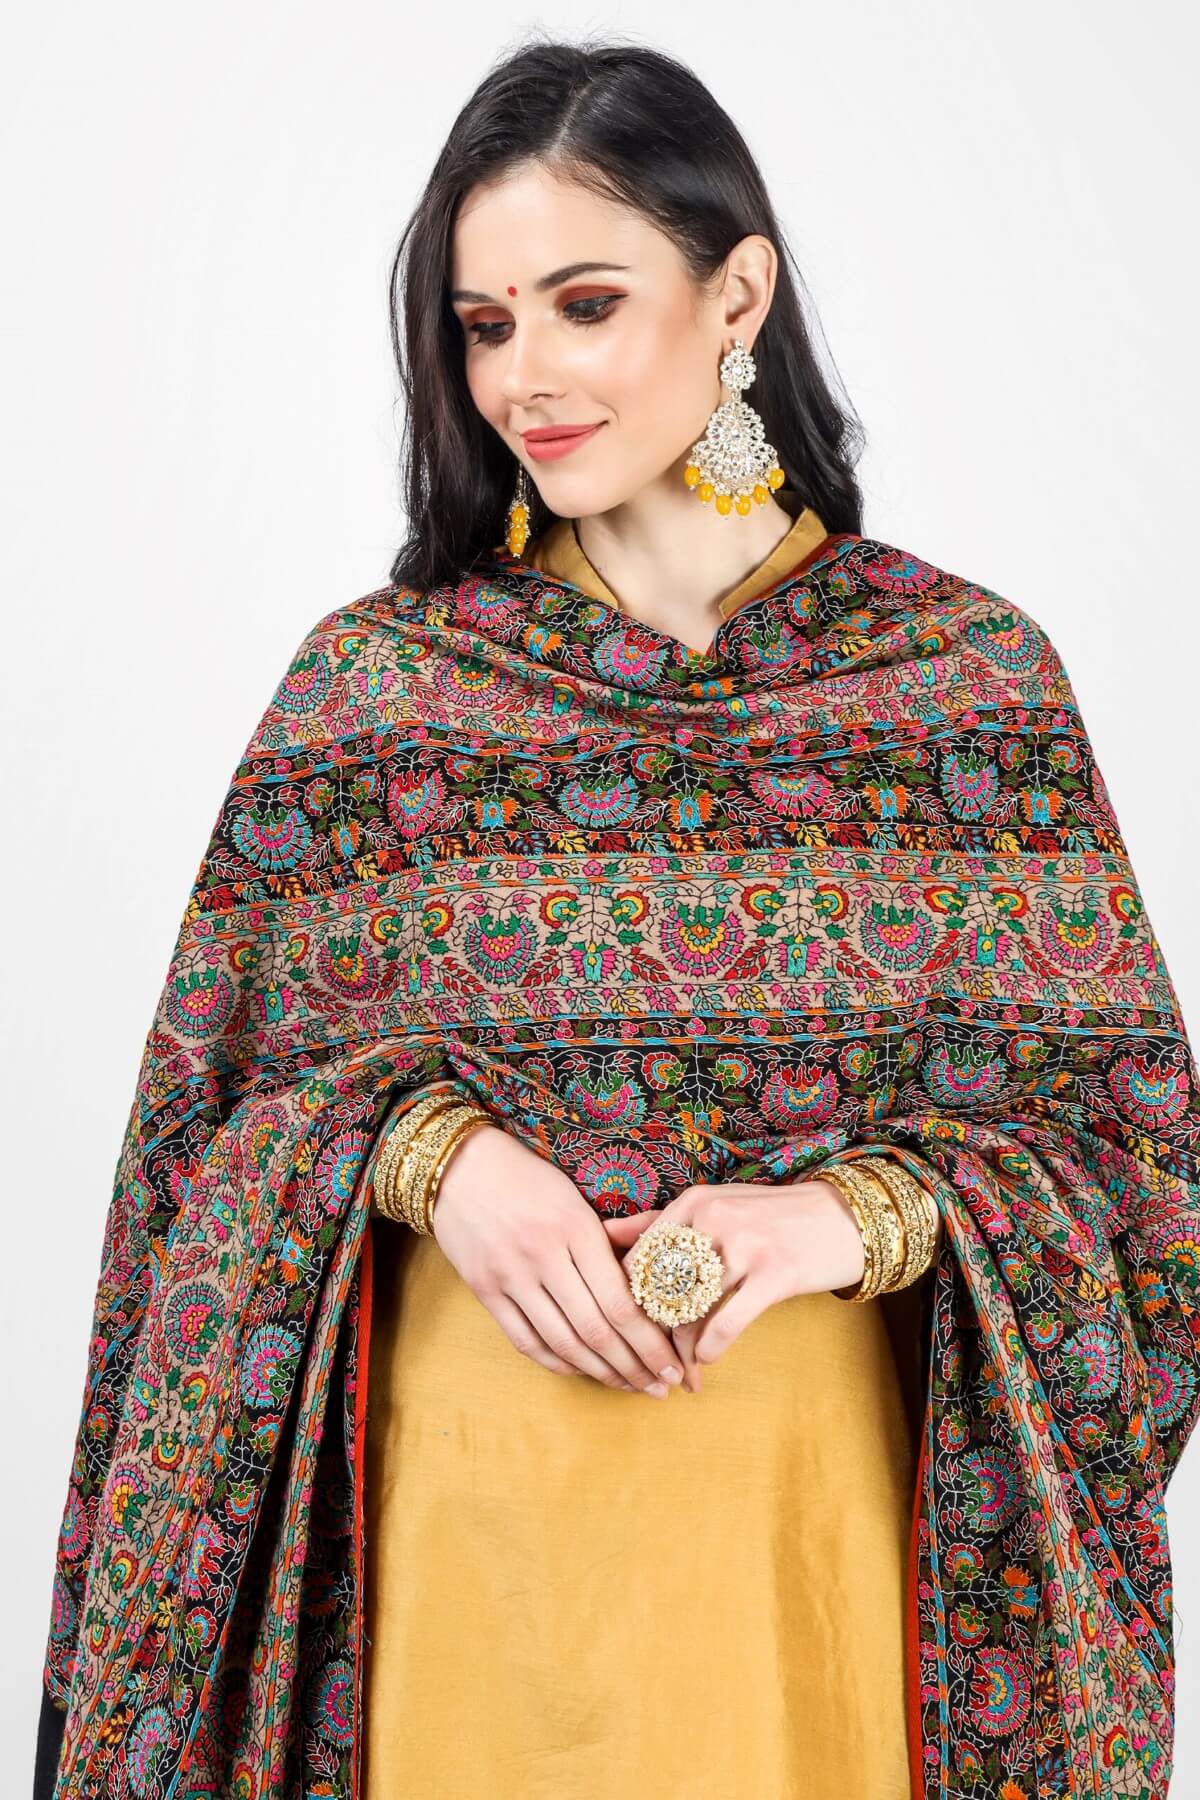 Black Pashmina sozni patched borders shawl